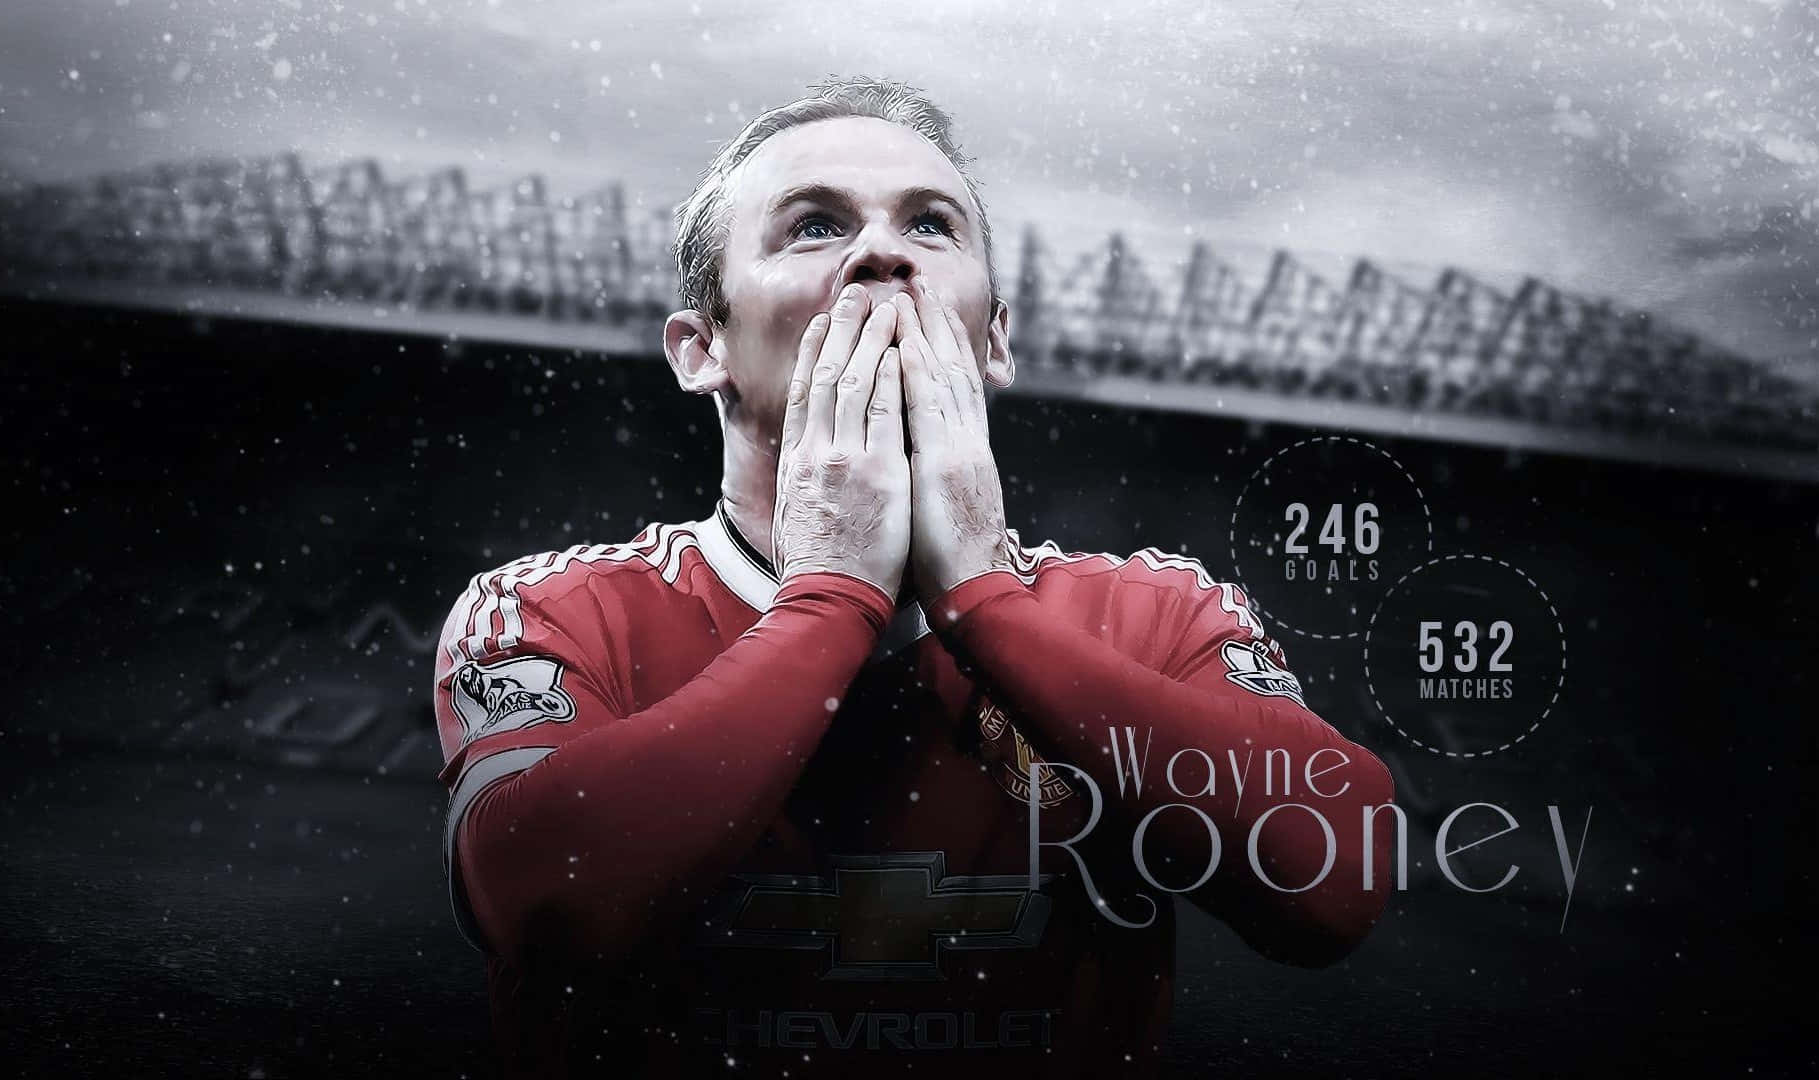 Football Superstar Wayne Rooney Celebrating His Latest Victory